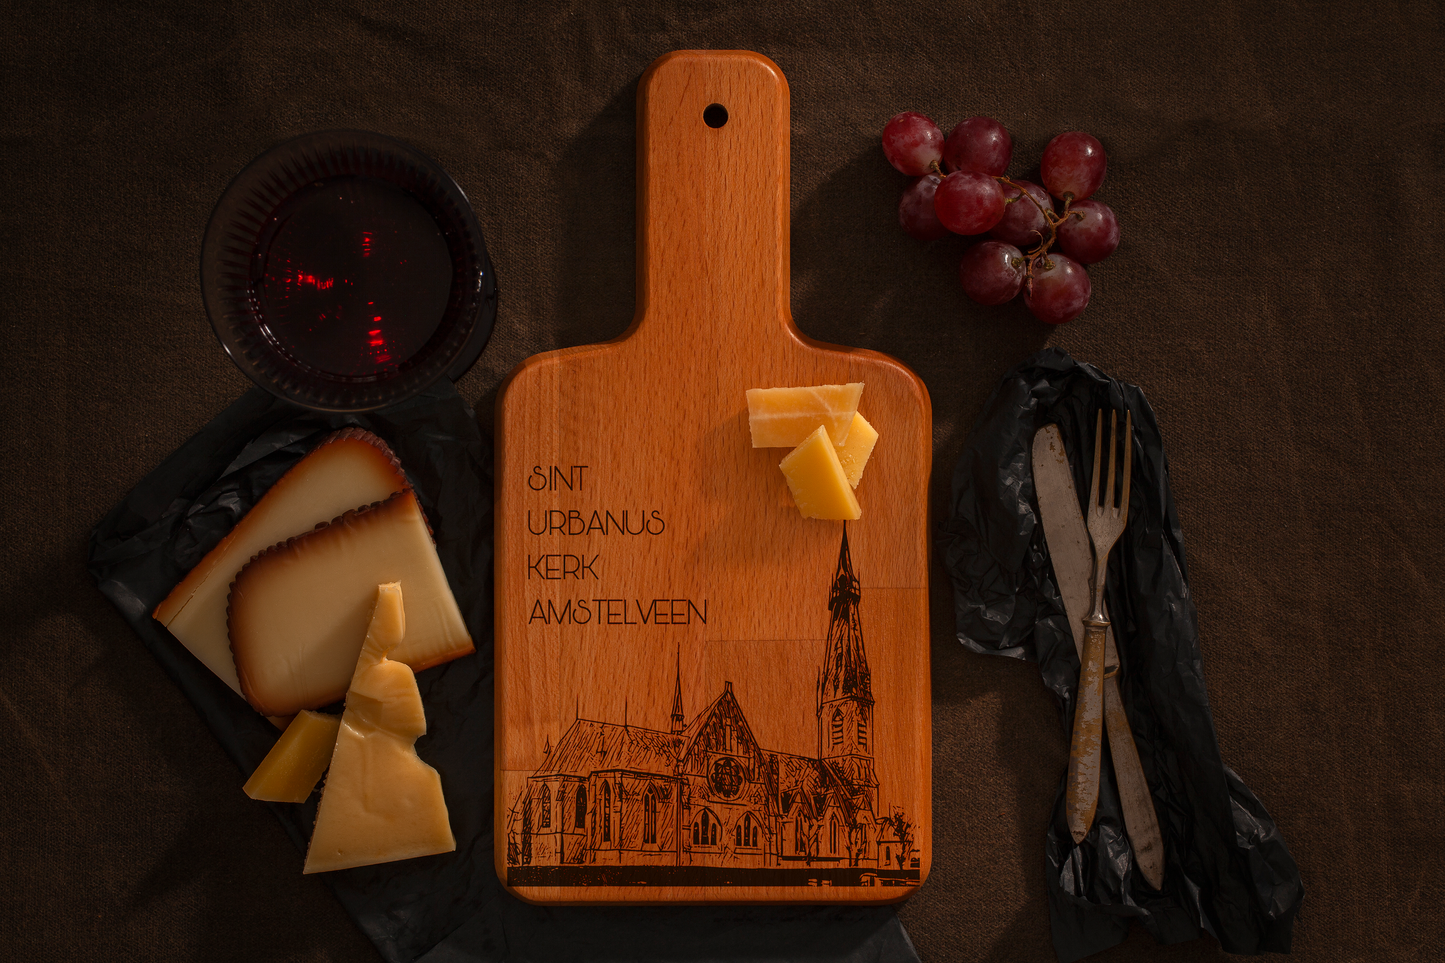 Amstelveen, Sint Urbanuskerk, cheese board, with cheese